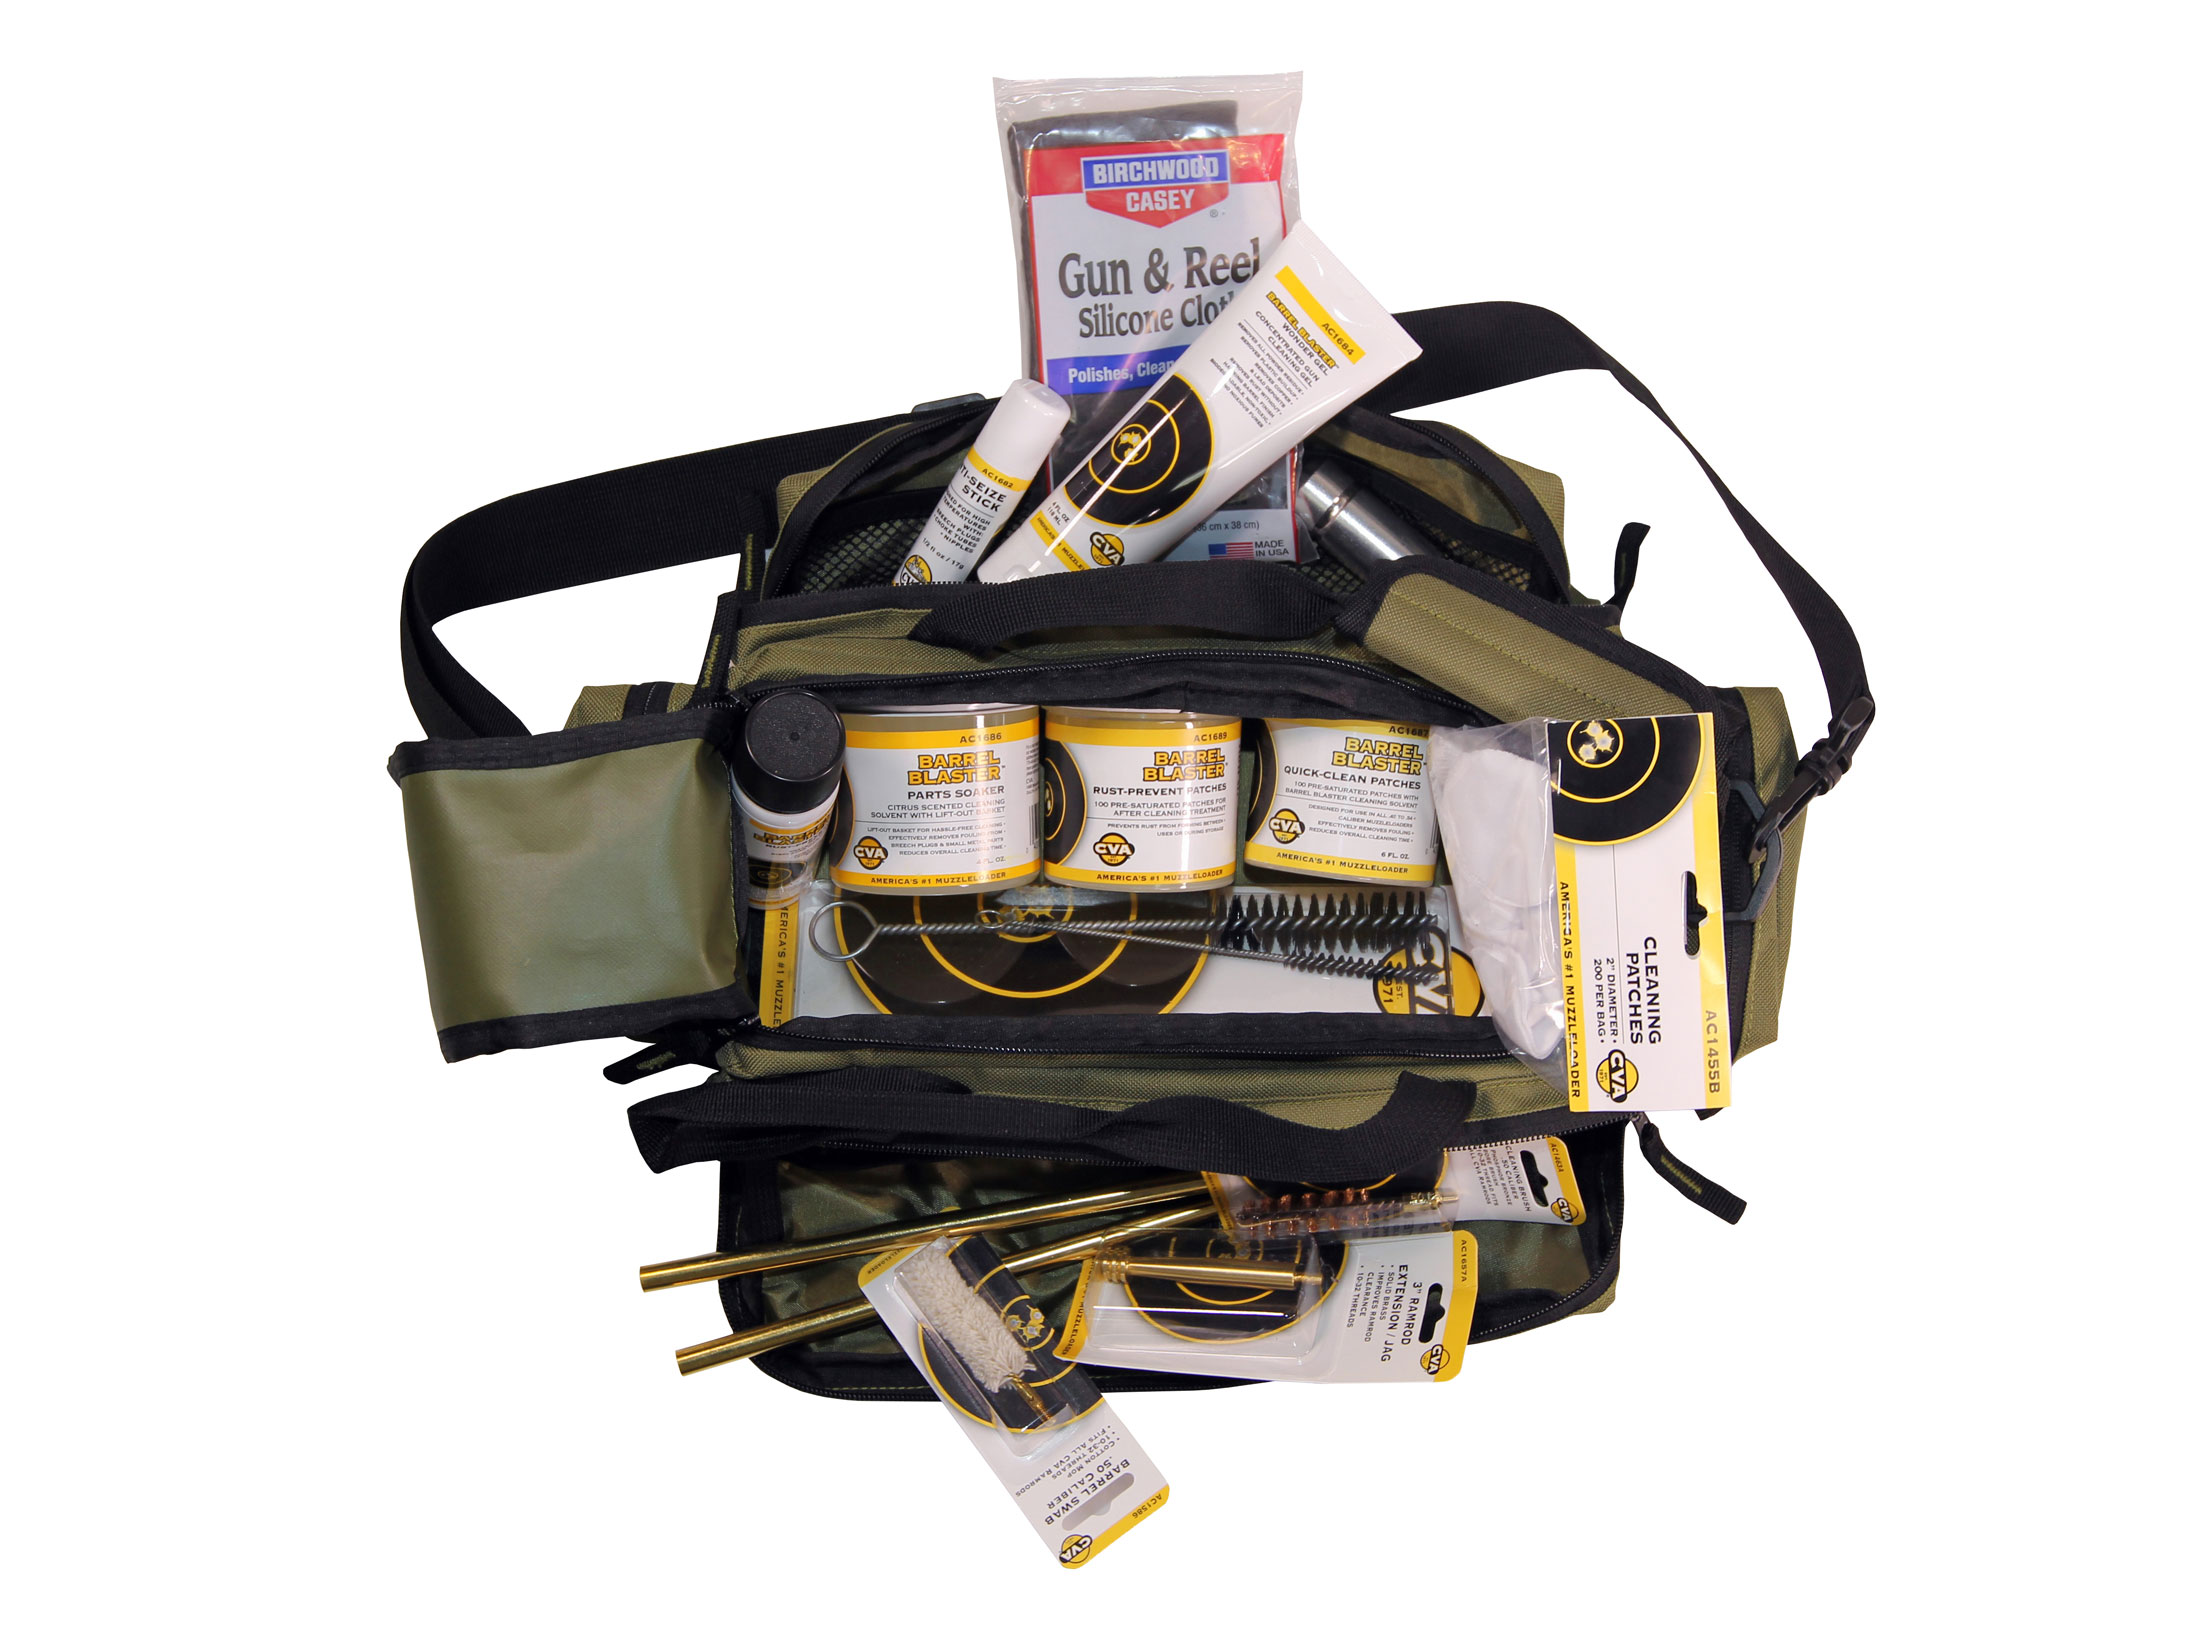 CVA Deluxe Soft Bag Range Cleaning Kit For Sale